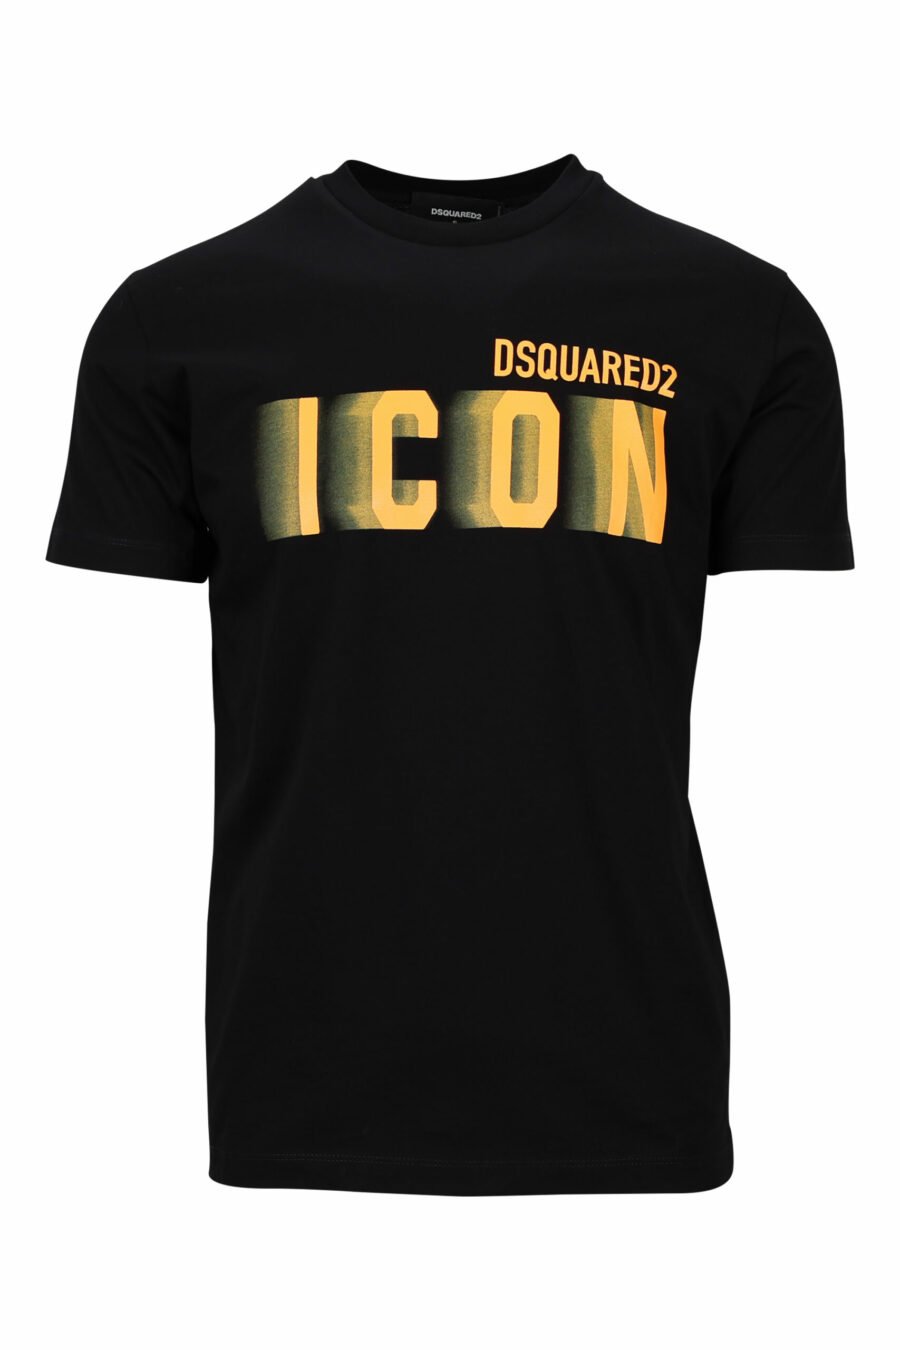 Camiseta negra con maxilogo "icon" naranja neon borroso - 8054148359195 scaled